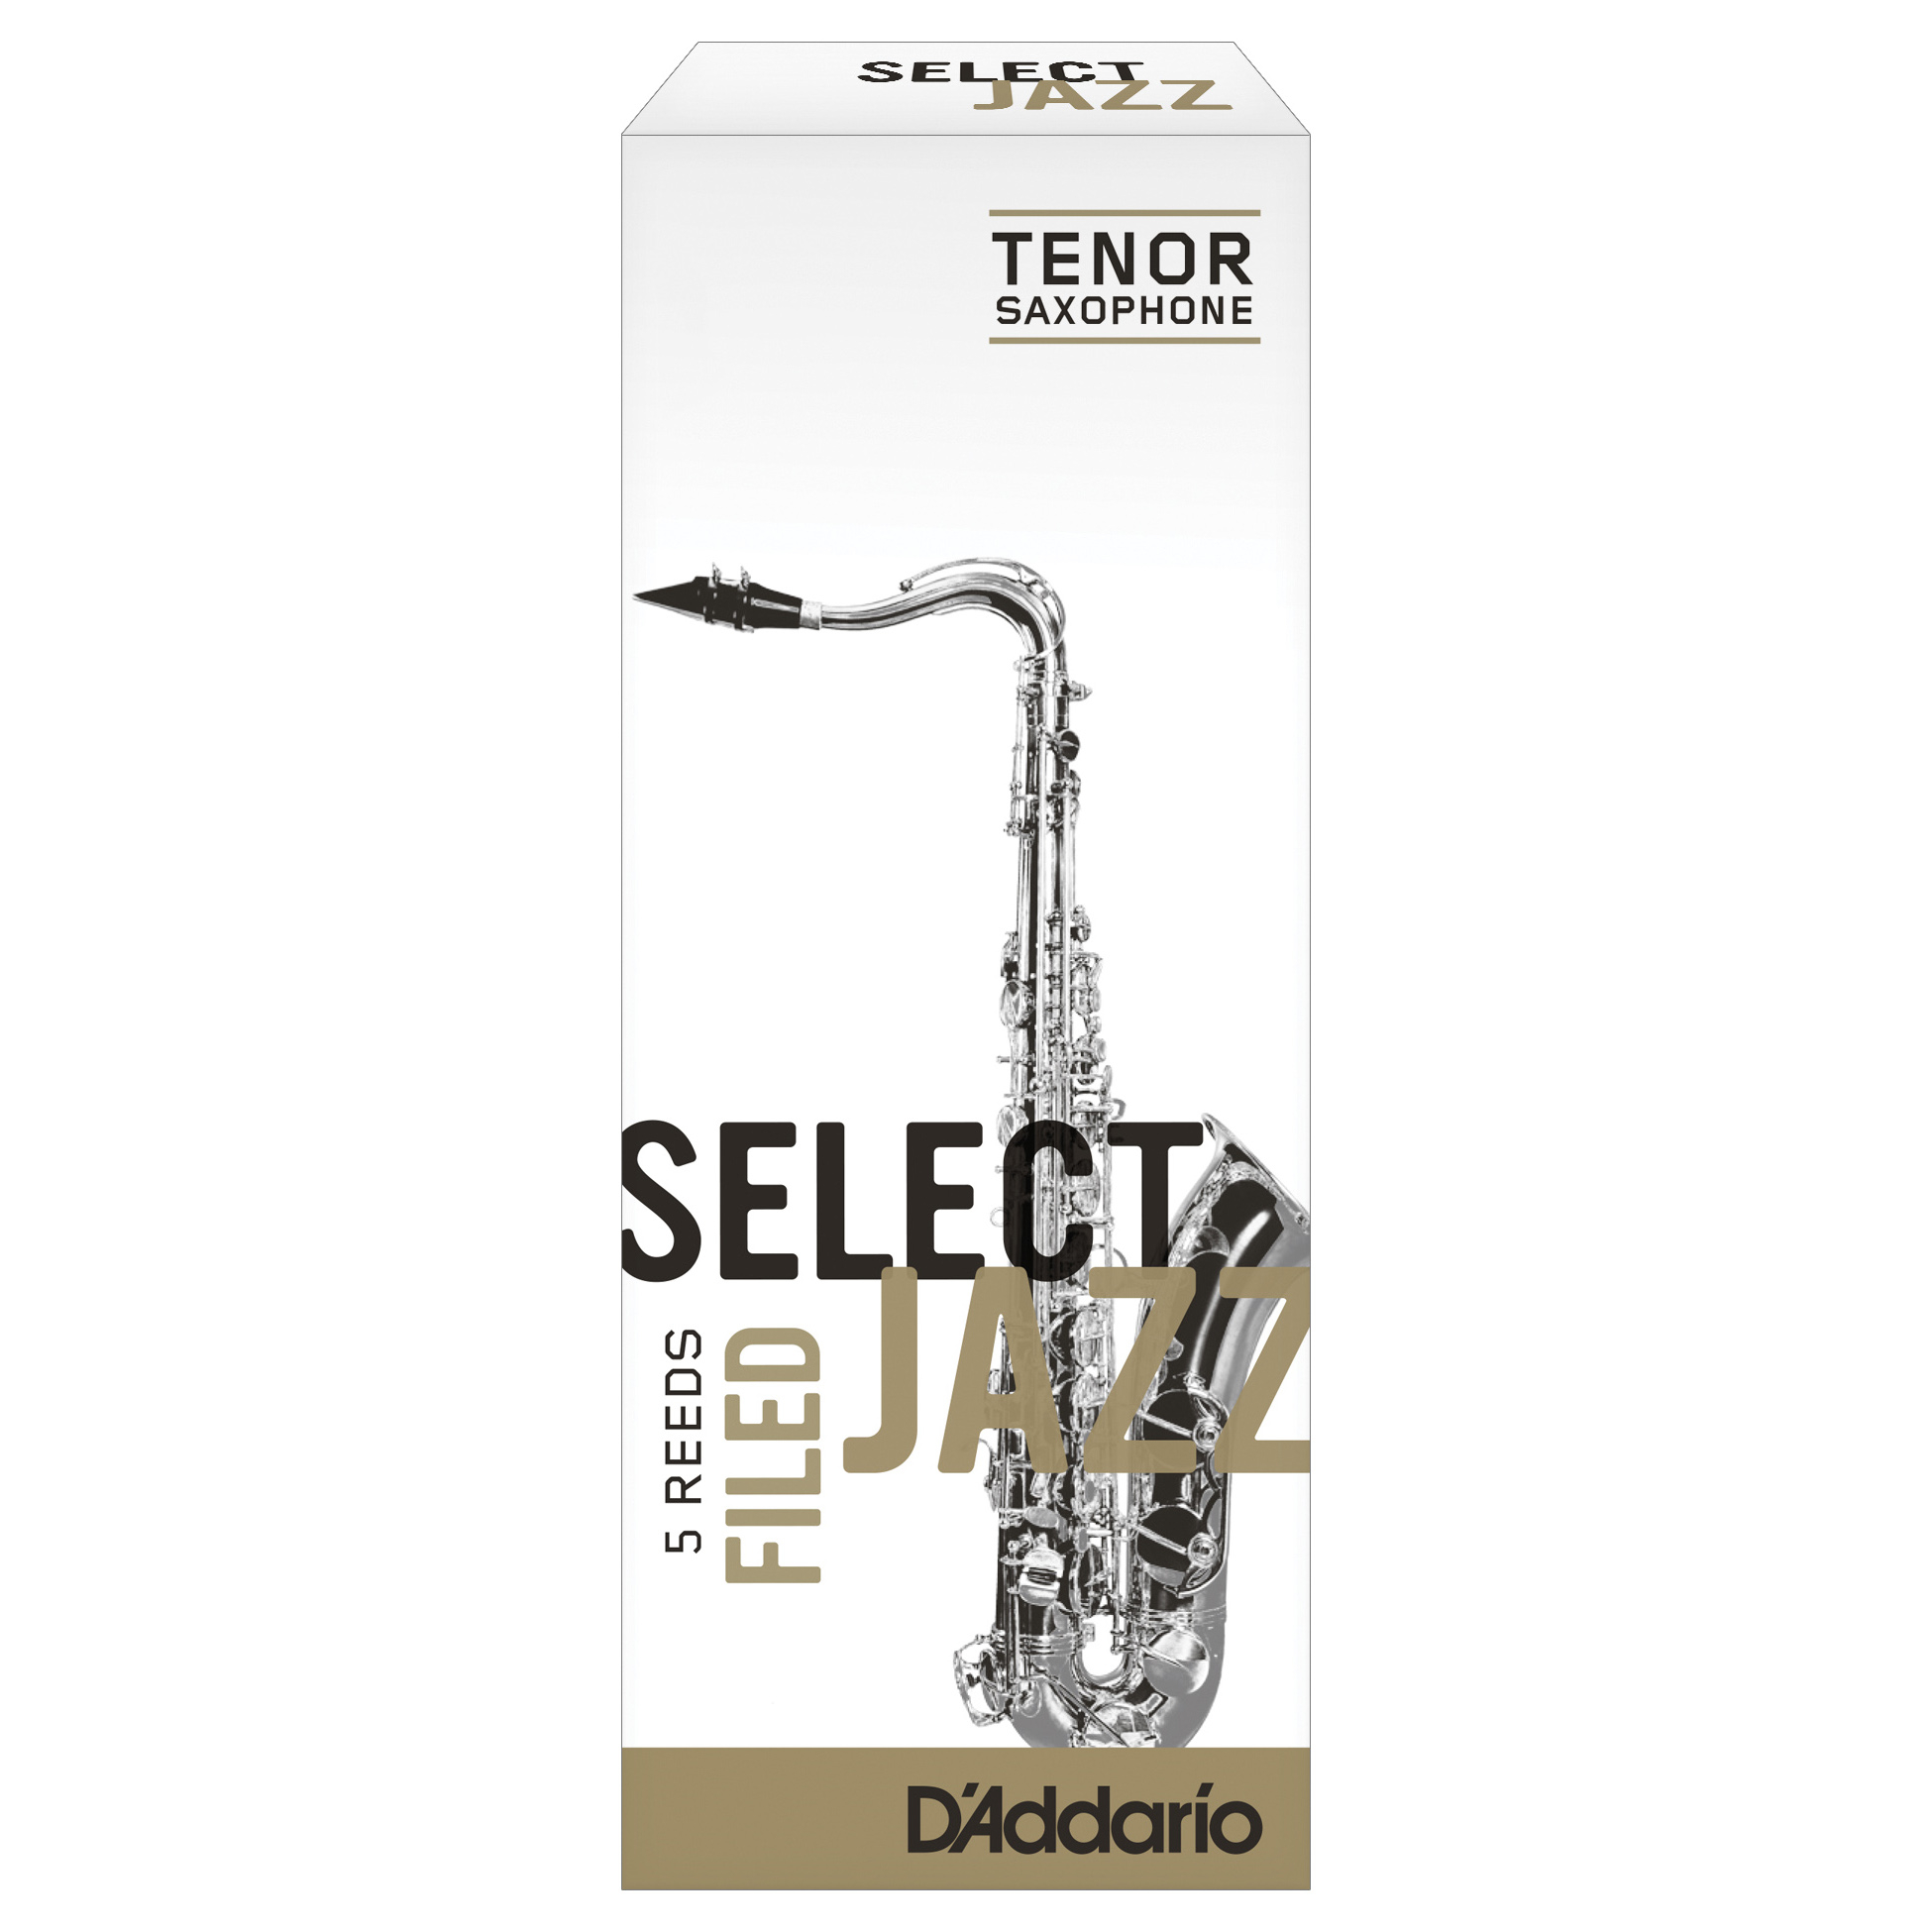 D'Addario Jazz Select Filed Reeds - Tenor Sax (Box of 5)